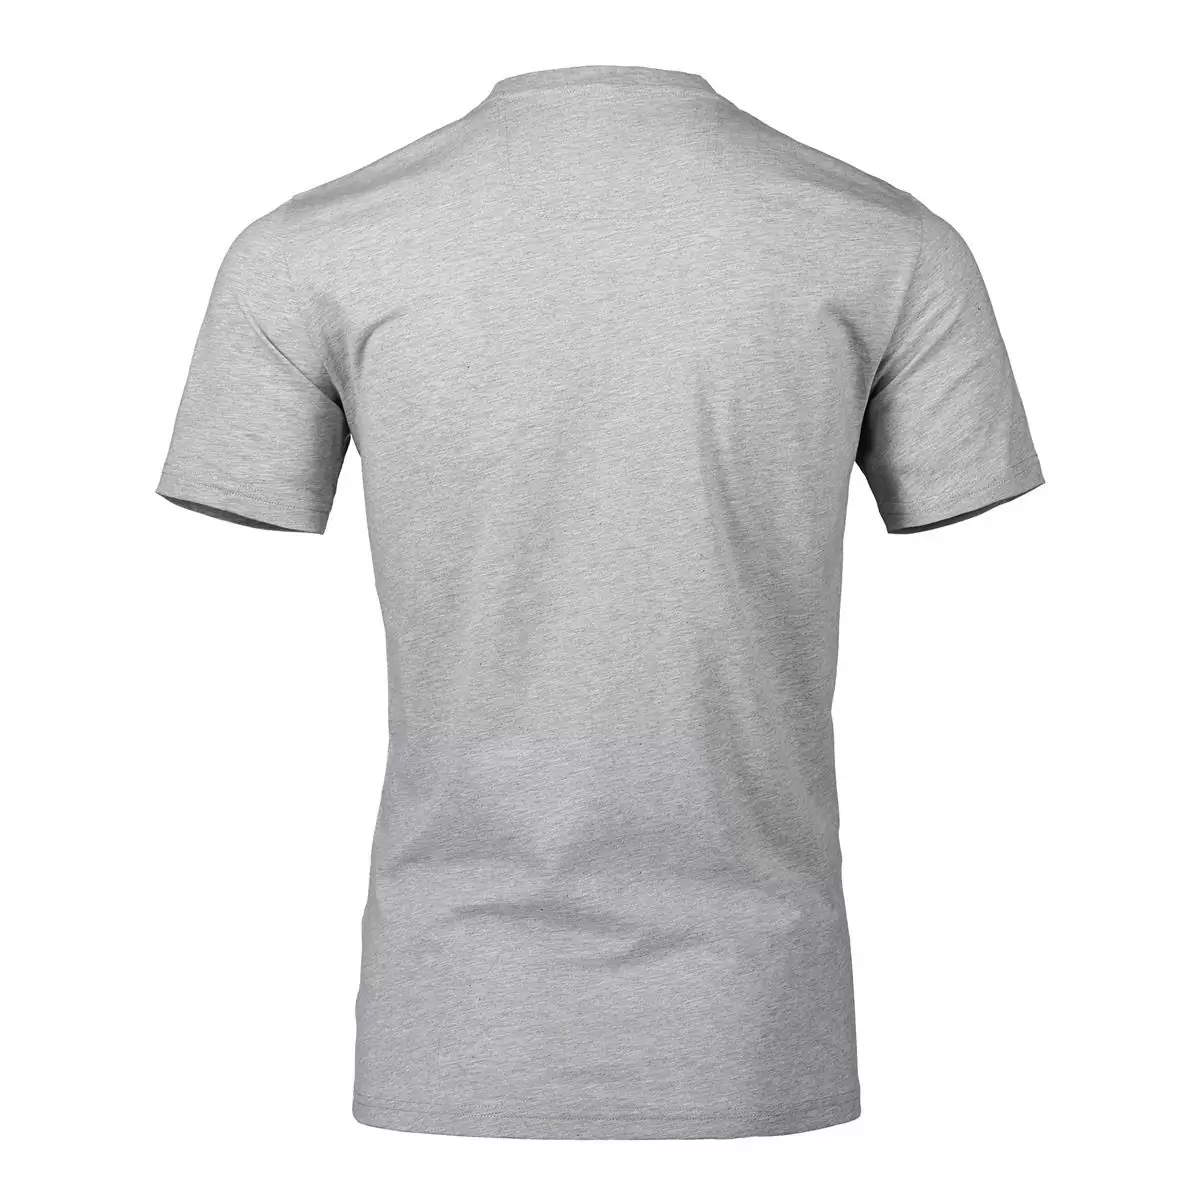 Kurzarm T-Shirt Grau Größe S #1